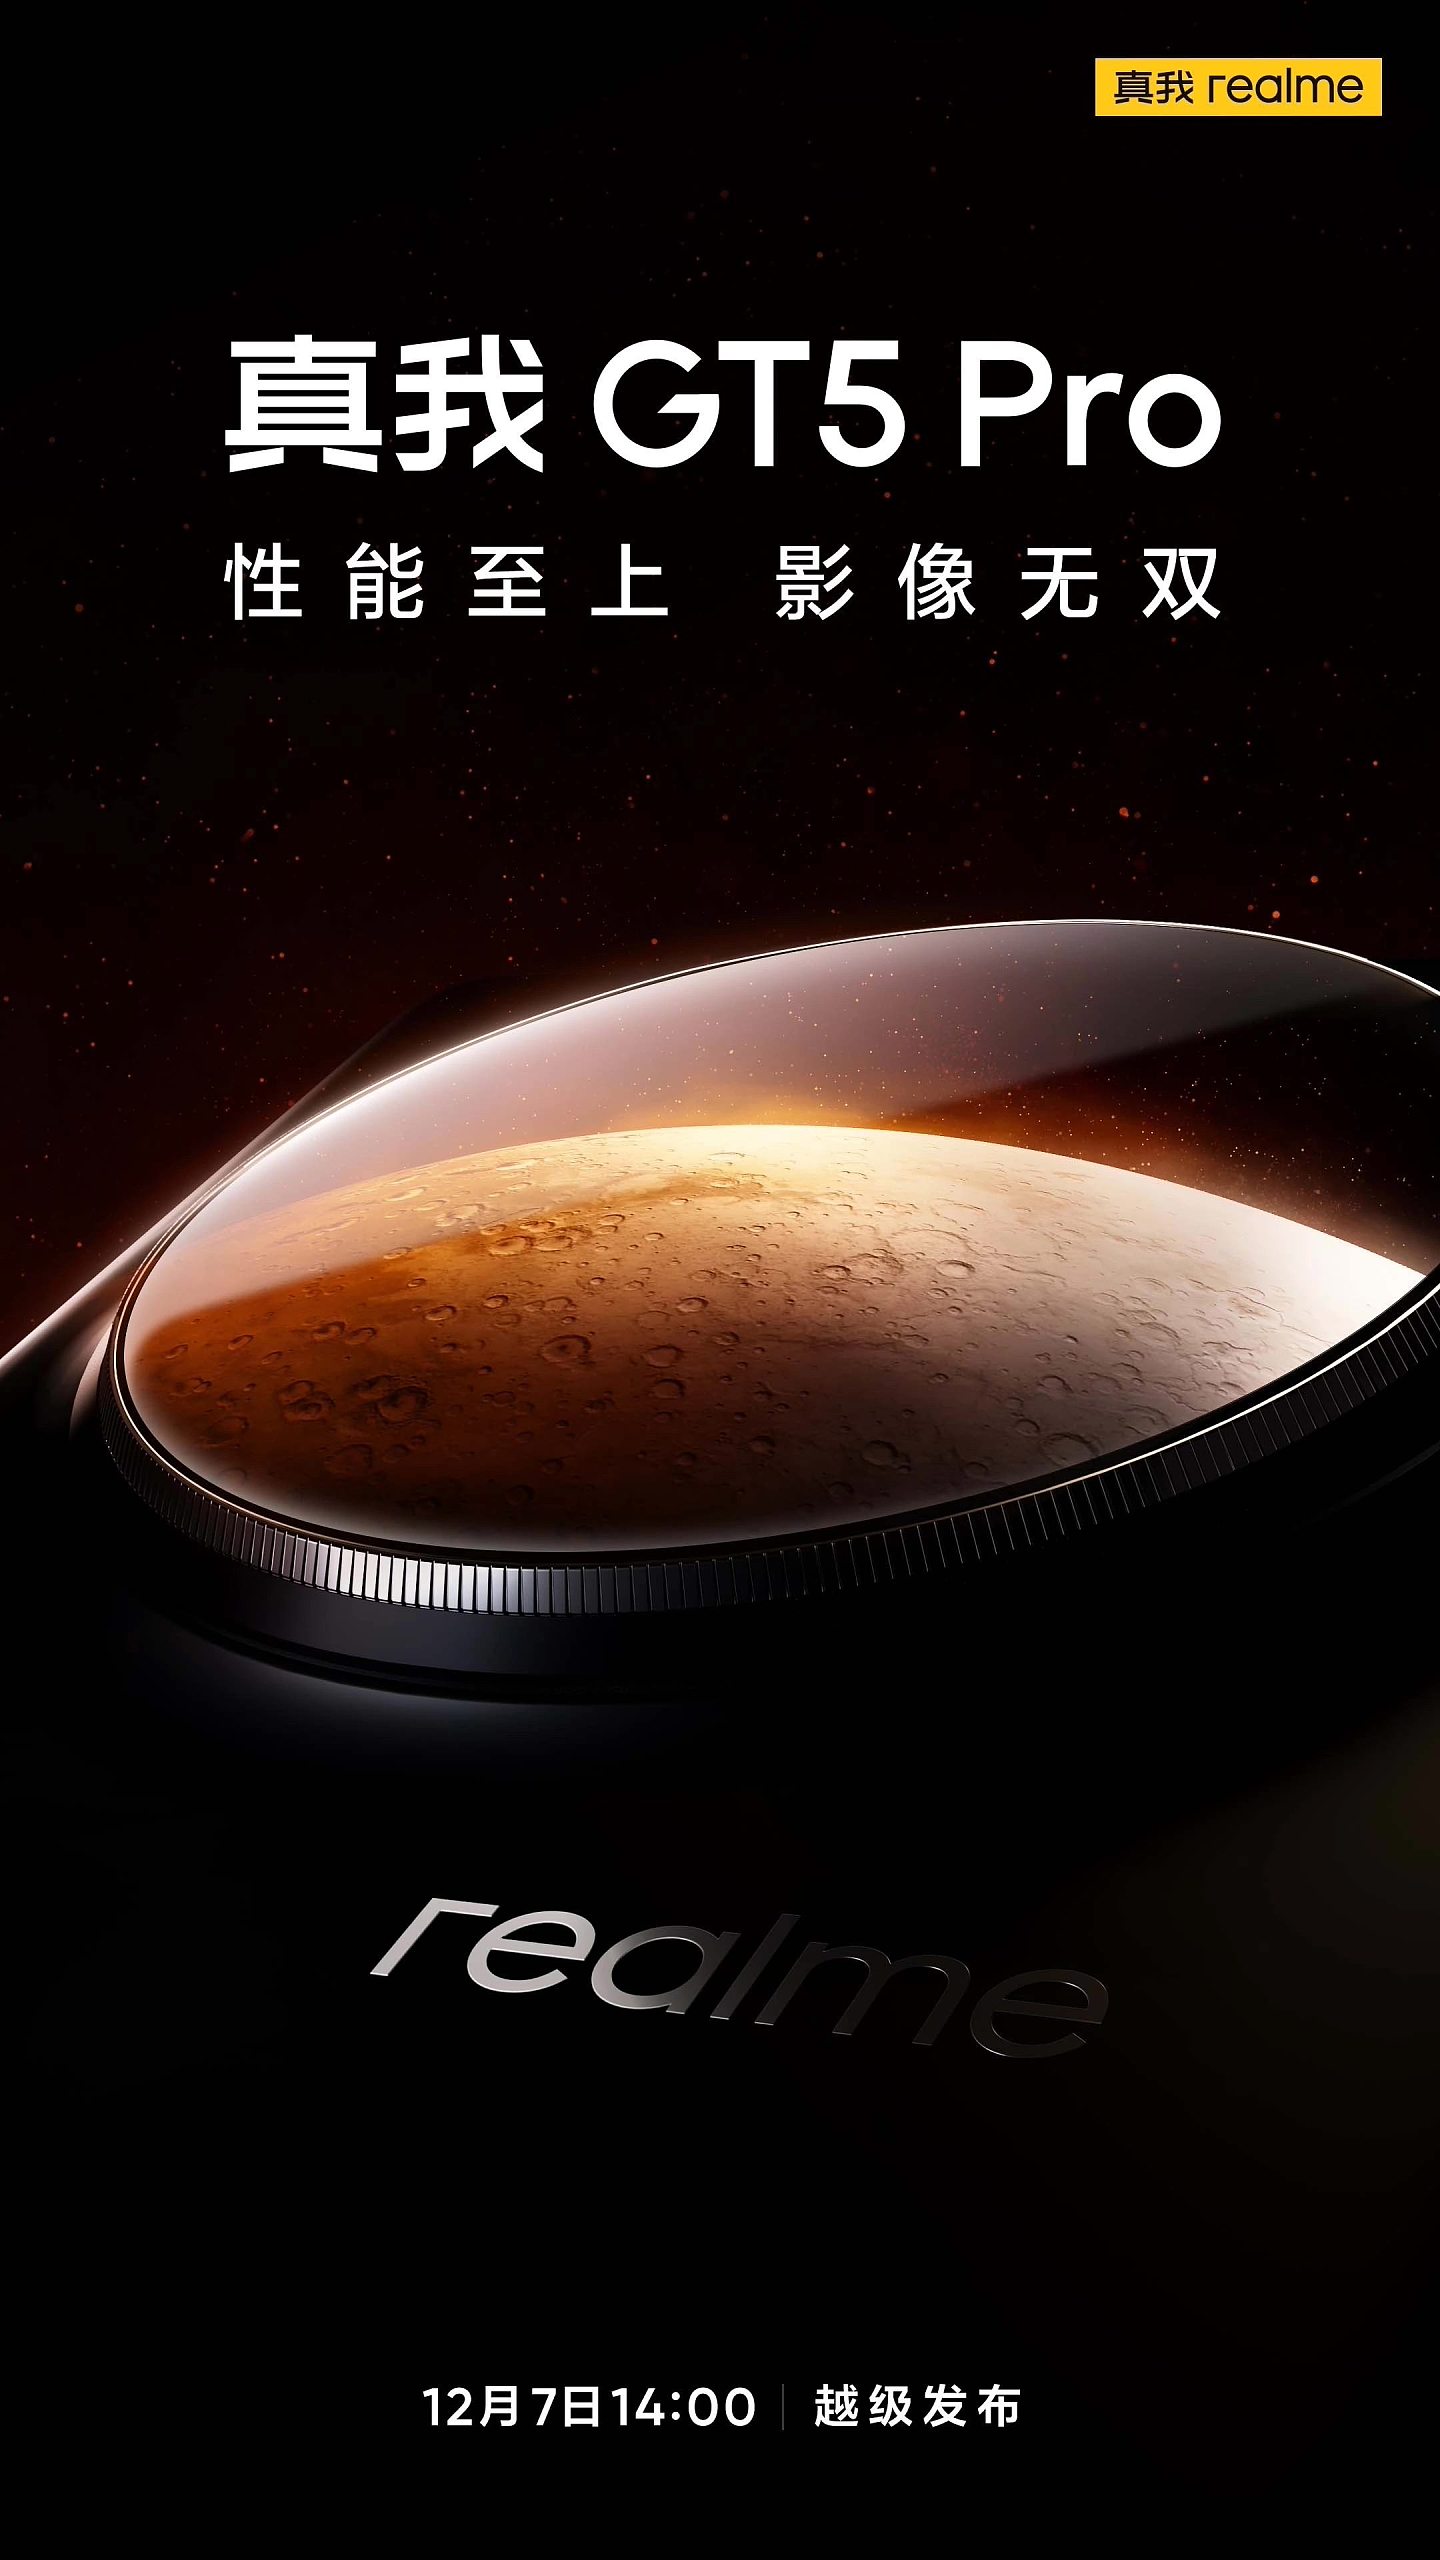 realme 真我 GT5 Pro 手机上架预约：骁龙 8 Gen 3 + IMX890 长焦，12 月 7 日发布 - 2